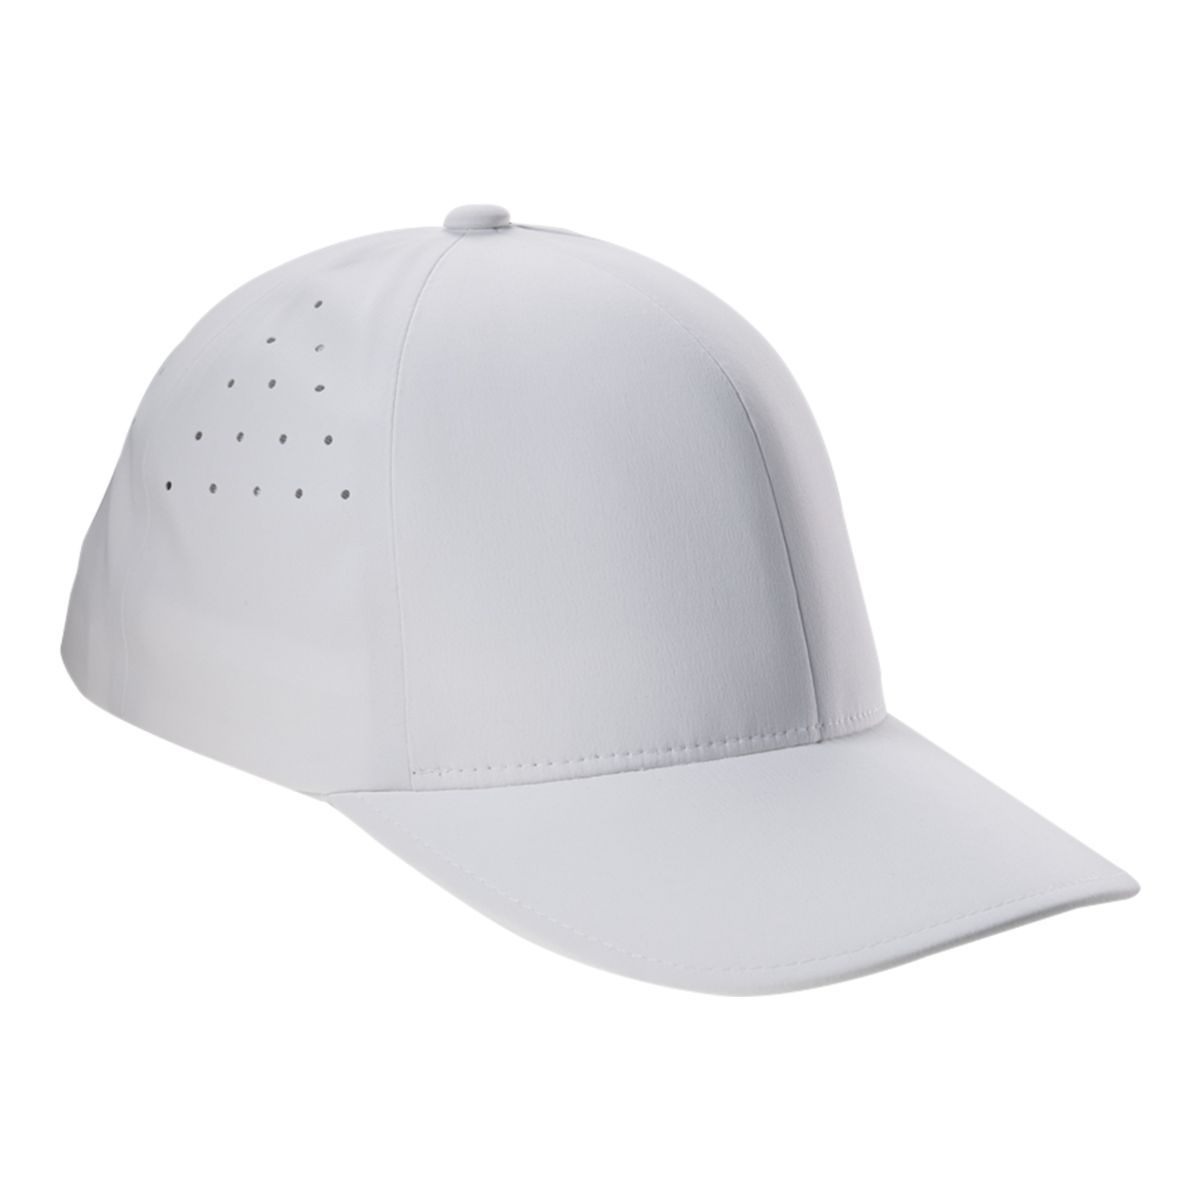 Image of Black Clover Women's Lady Seamless 1 Adjustable Golf Hat